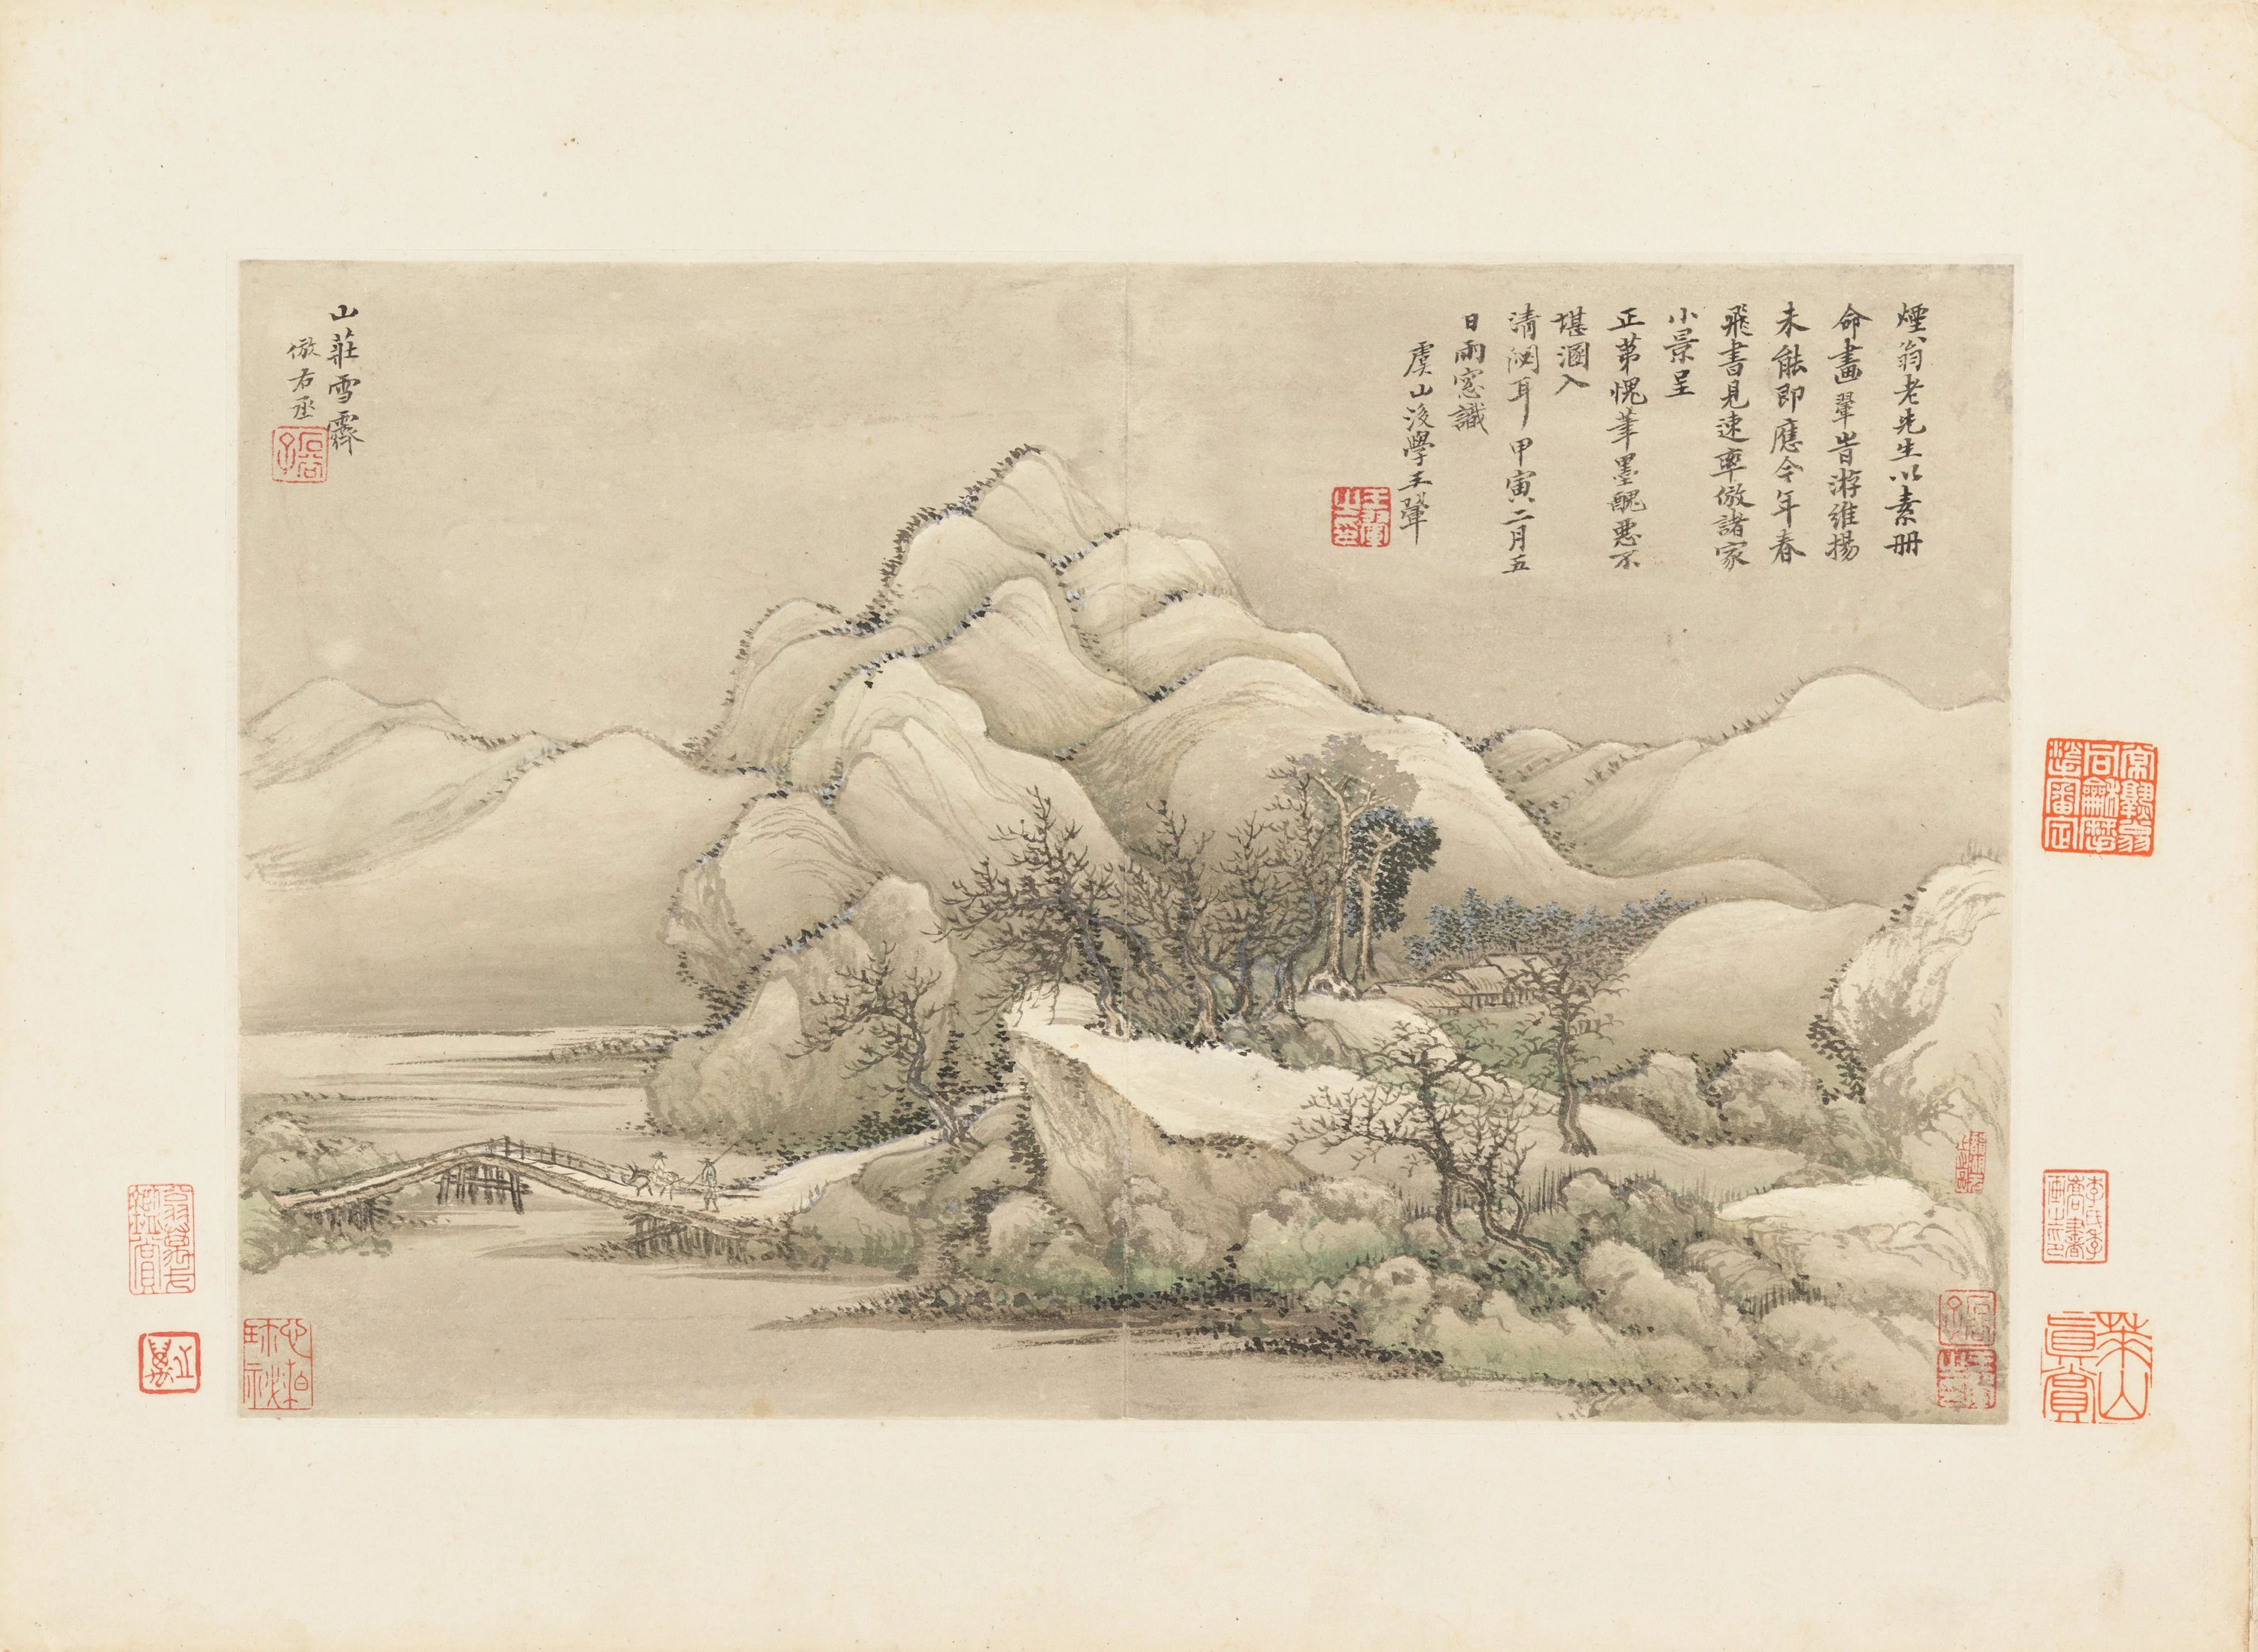 Landscapes 10, 仿古山水圖, Wang Hui (王翚)